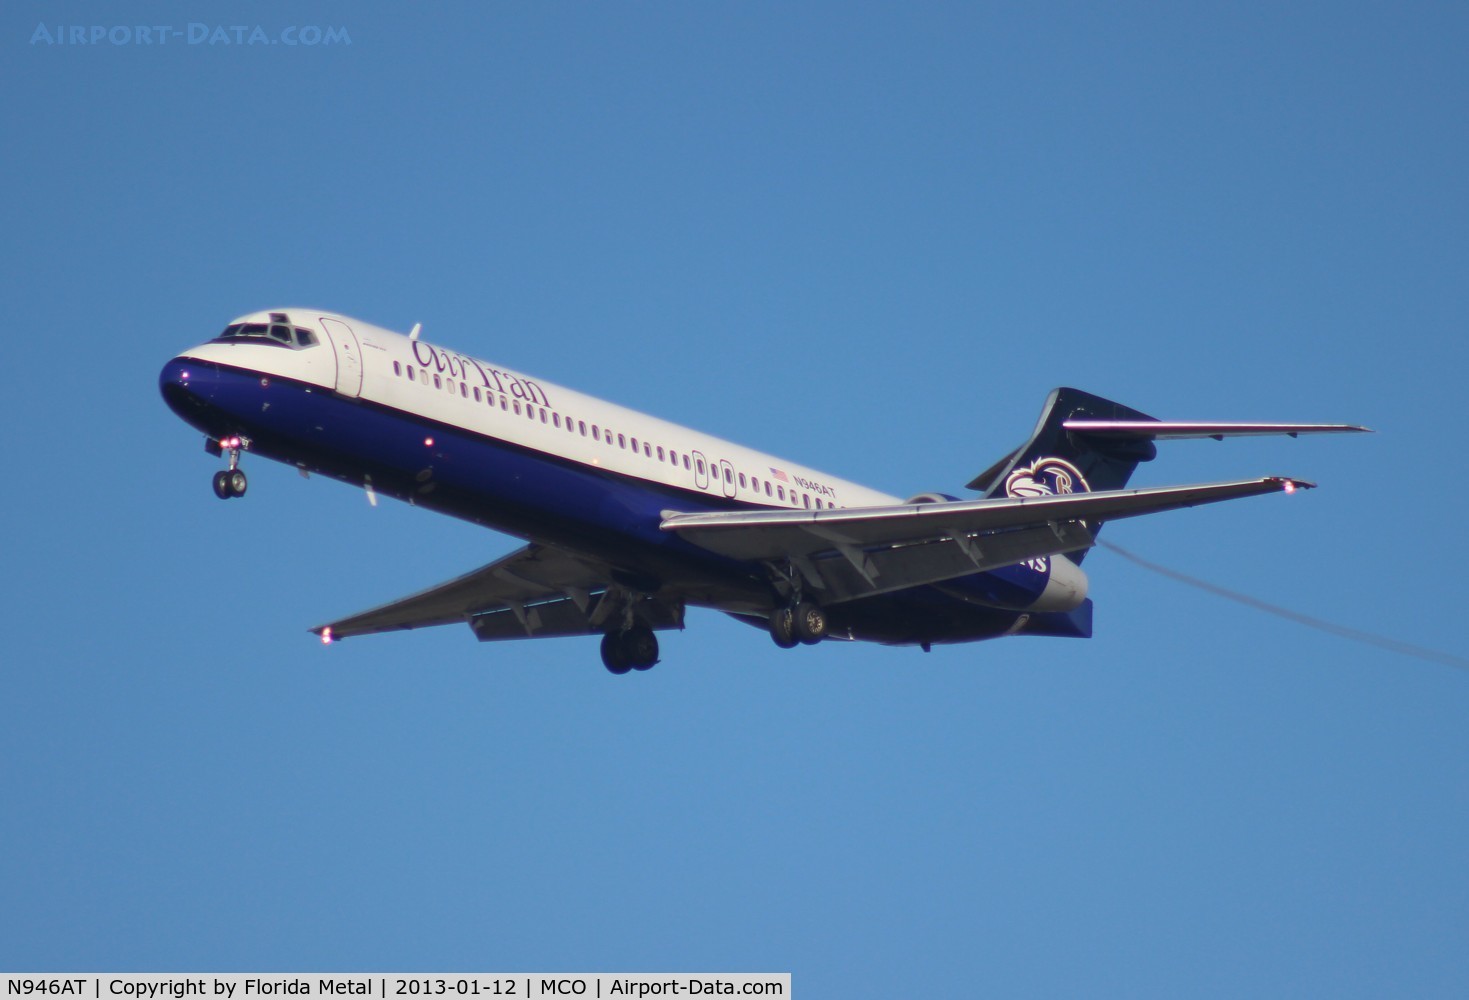 N946AT, 1999 Boeing 717-200 C/N 55009, Air Tran 717 still in Baltimore Ravens colors